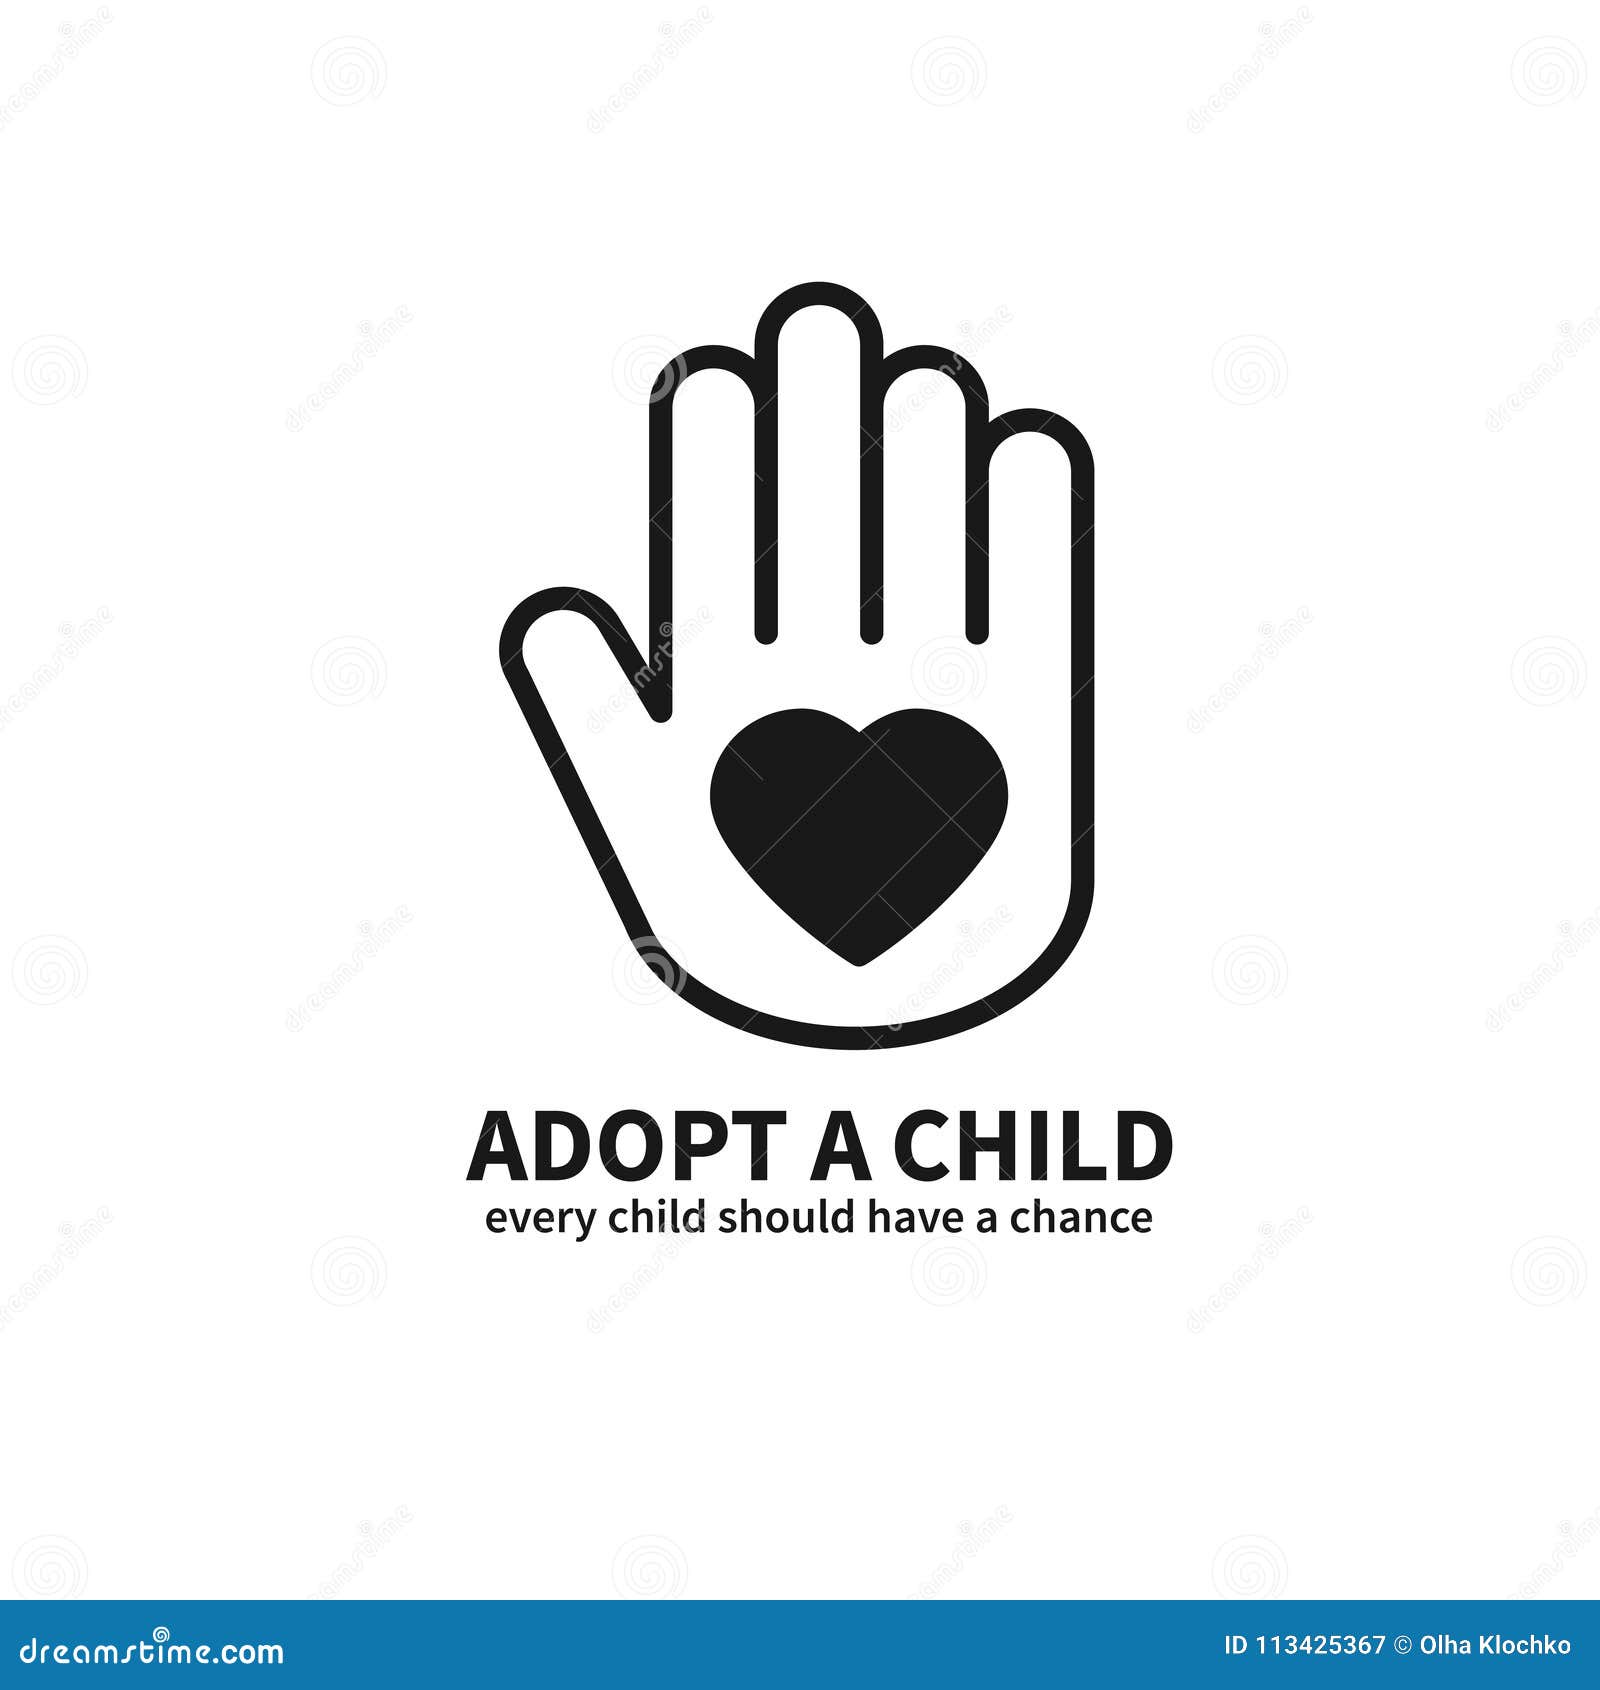 adopt a child